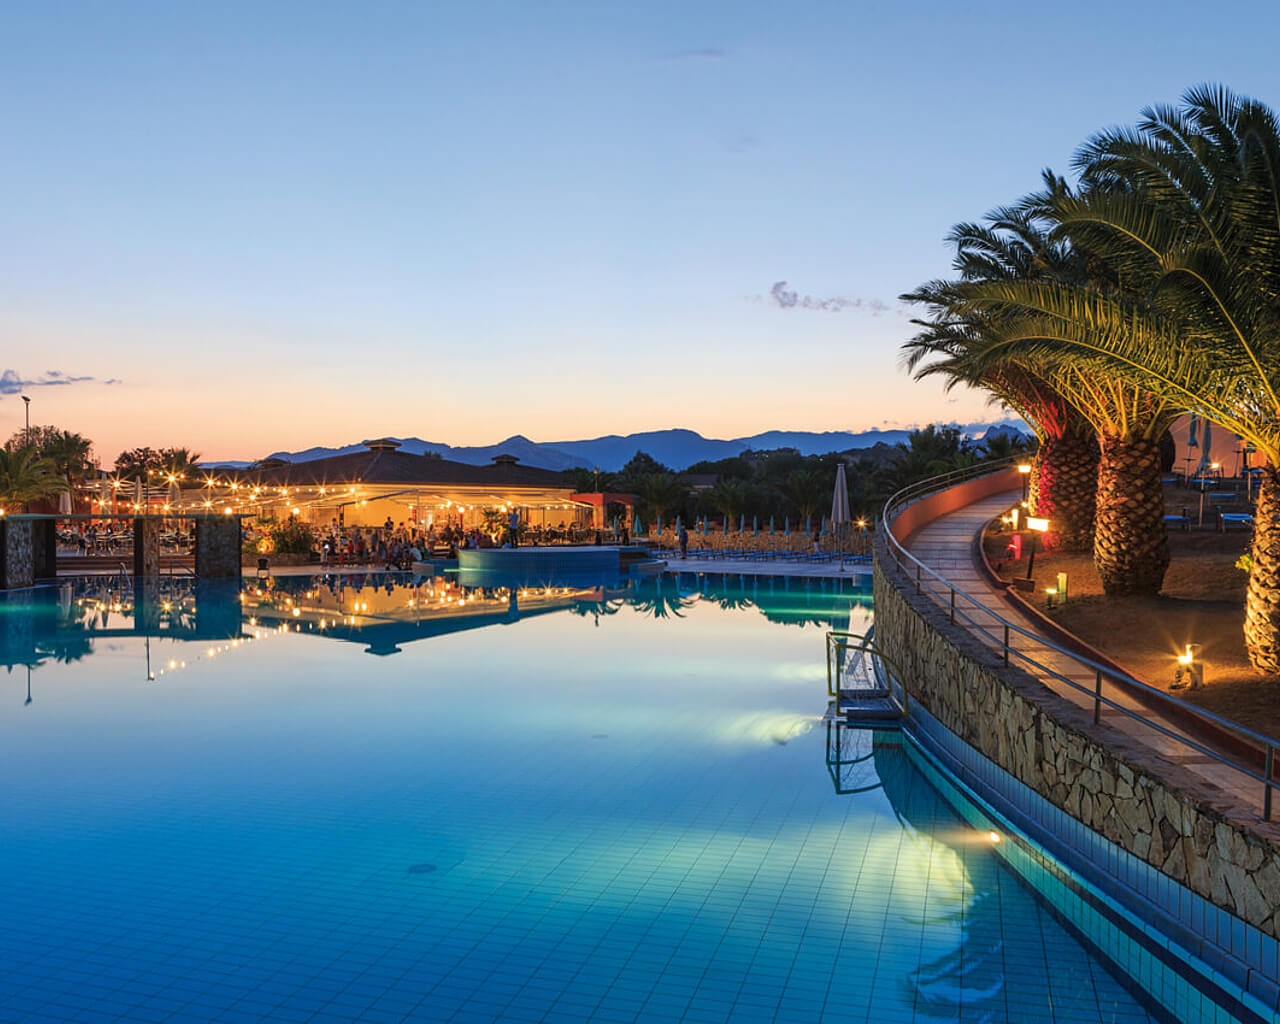 Vacances à l'hôtel Tirreno Resort, Cala Liberotto, Sardaigne